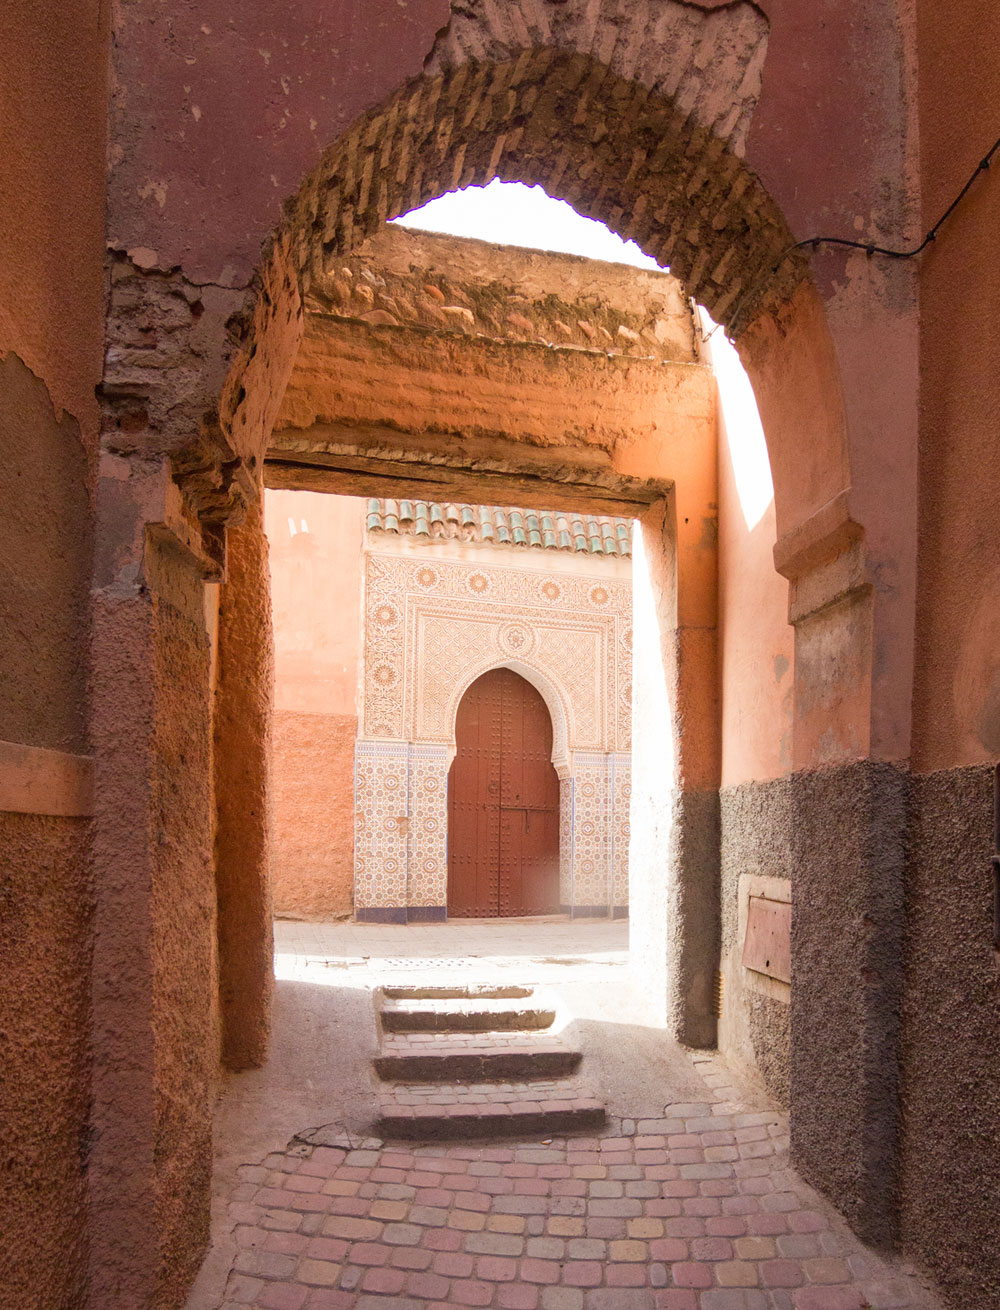 Morrocco-Marrakesh-Alleyway-travel